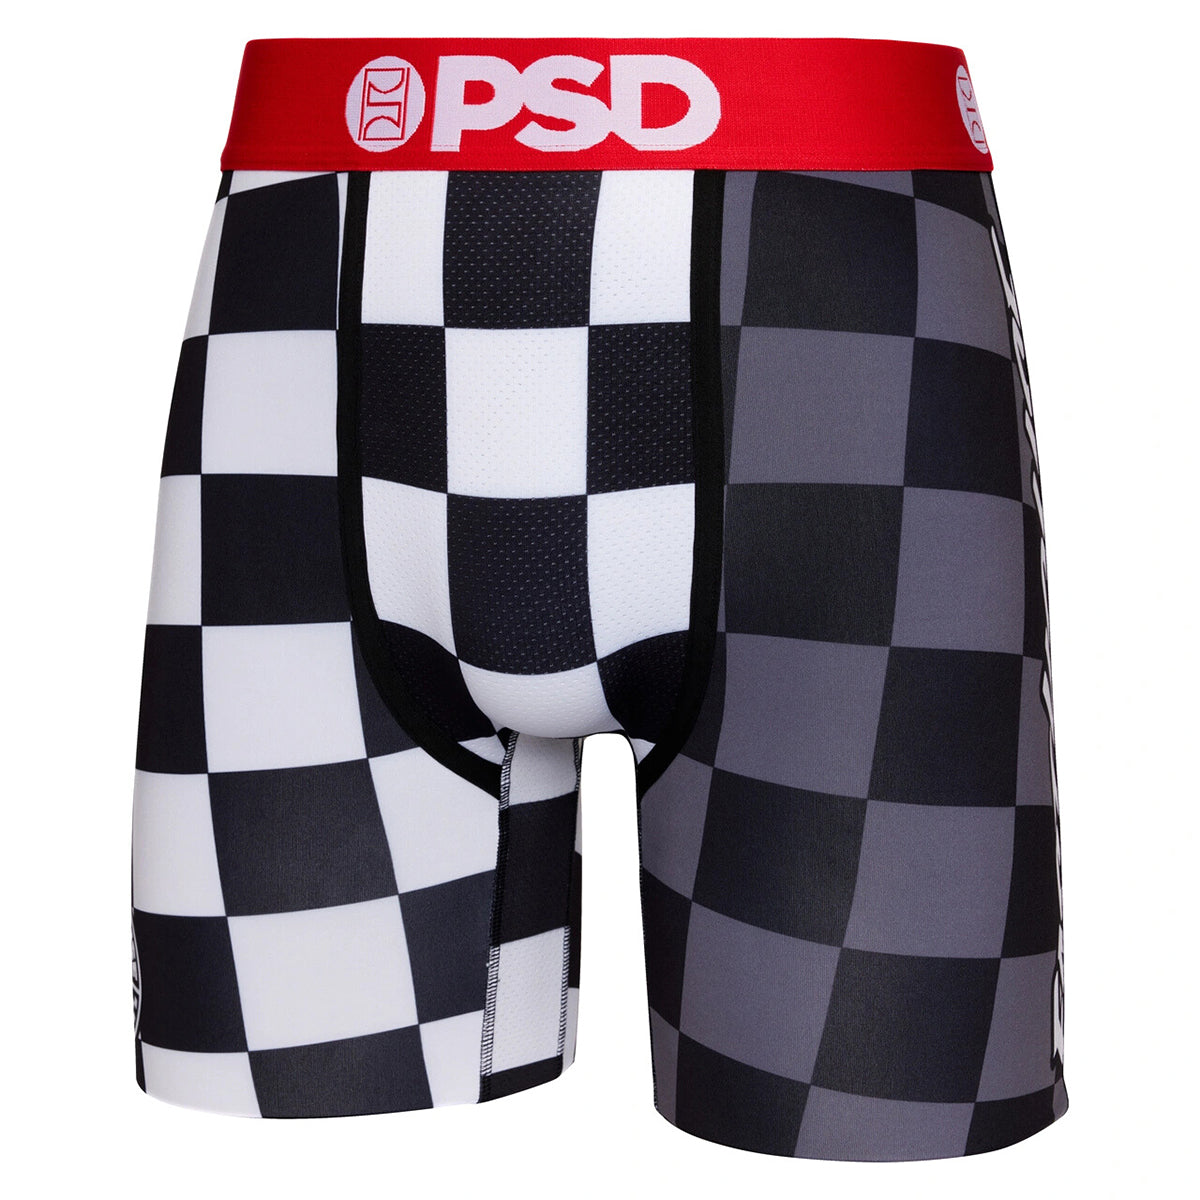 Psd Underwear -  Canada